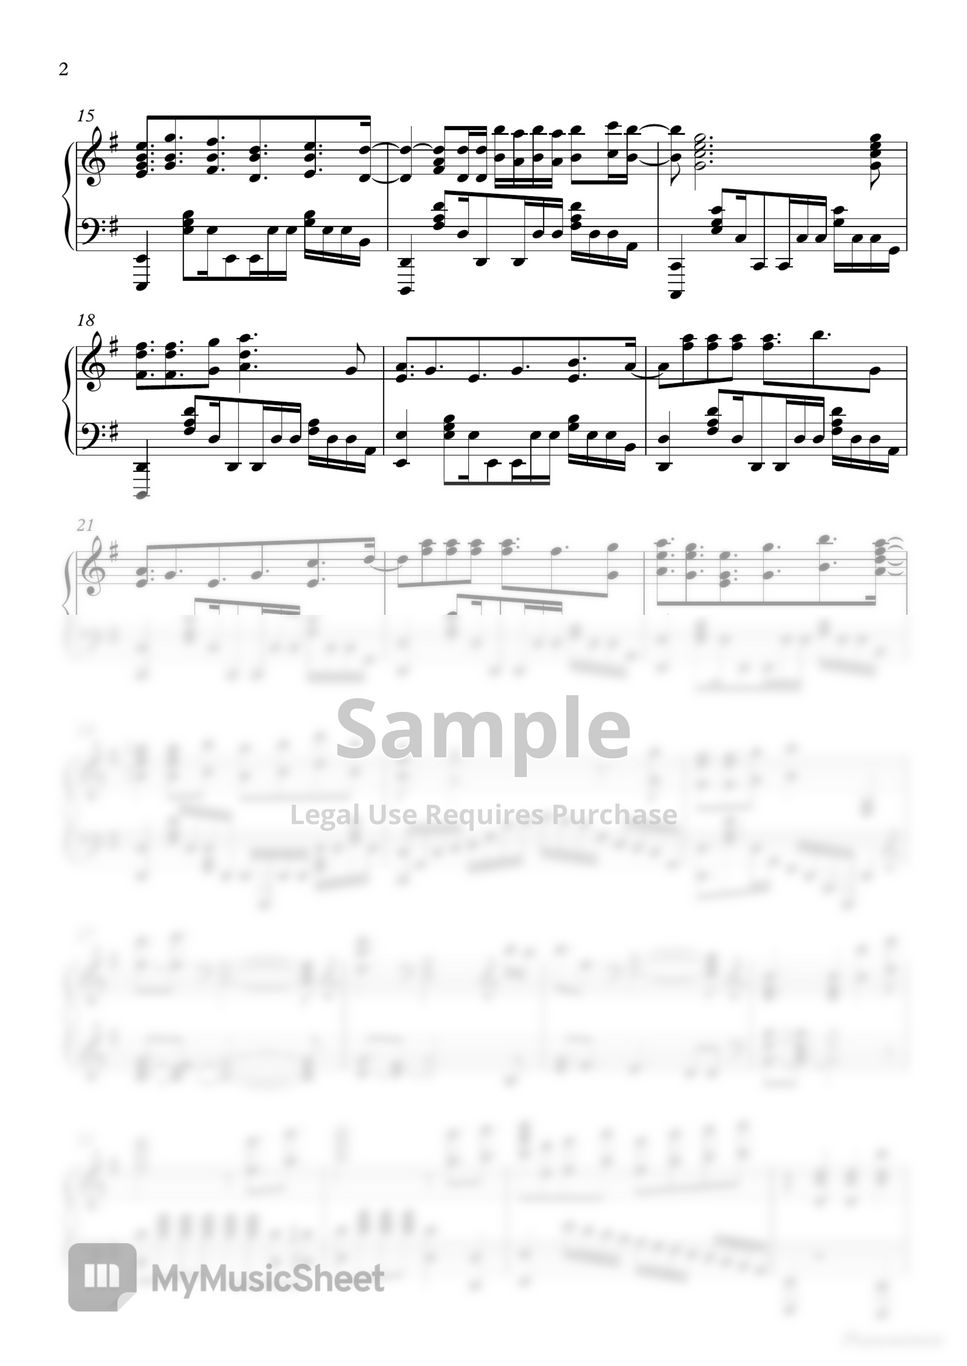 Gurenge - LiSA HARD version Sheet music for Piano (Solo)